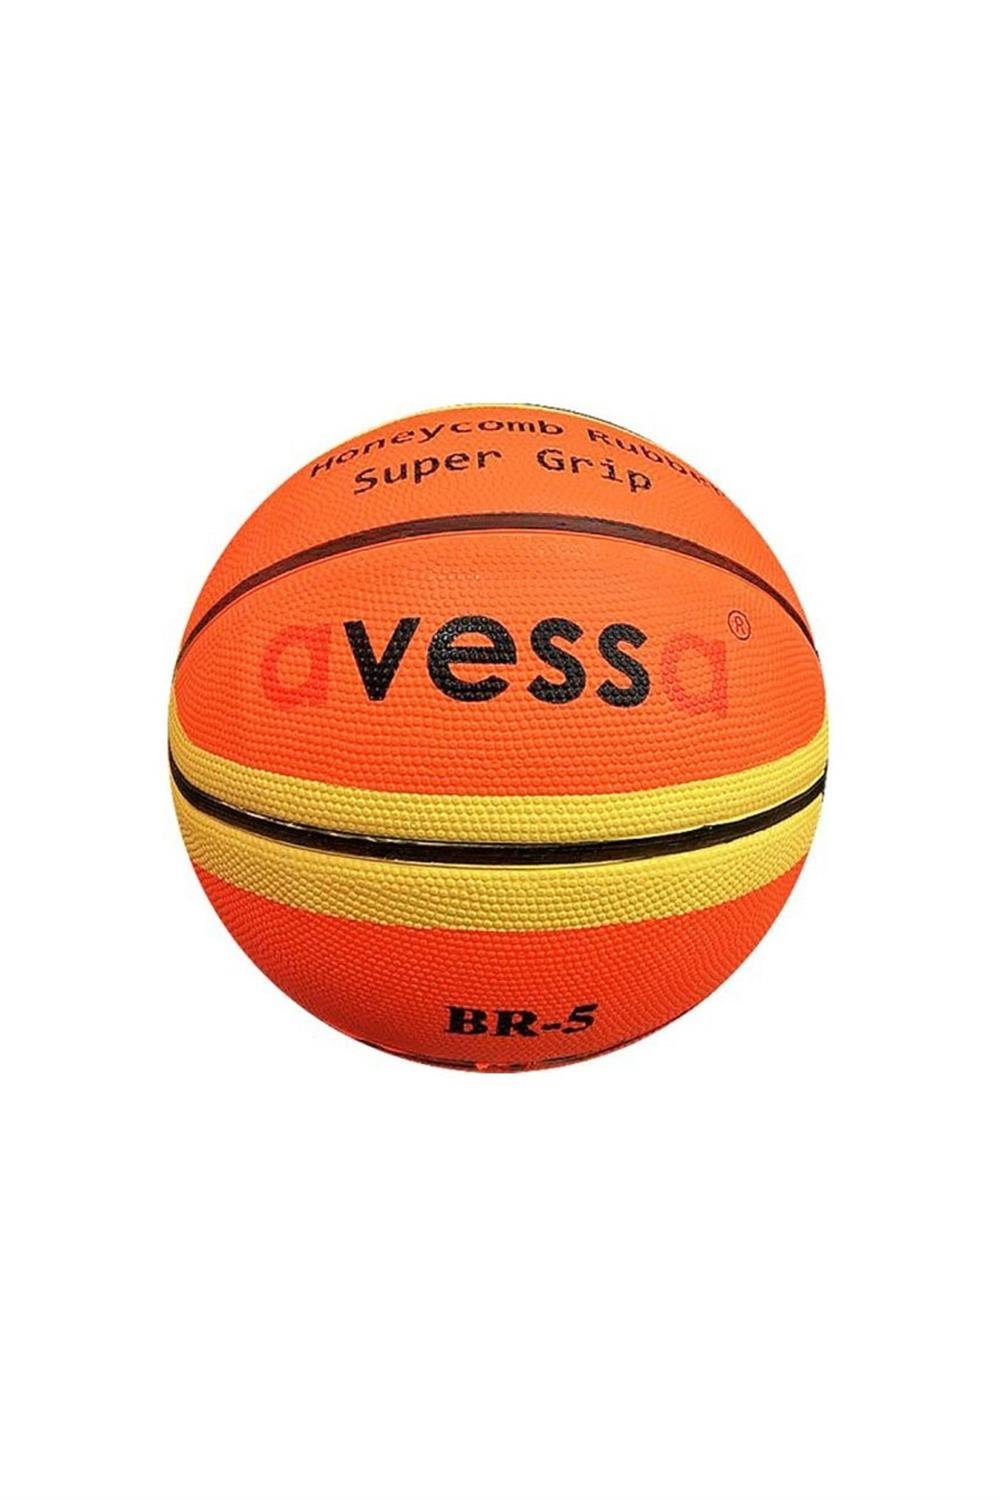 Avessa Basketbol Topu Kauçuk BR-5 | Sporborsasi.com